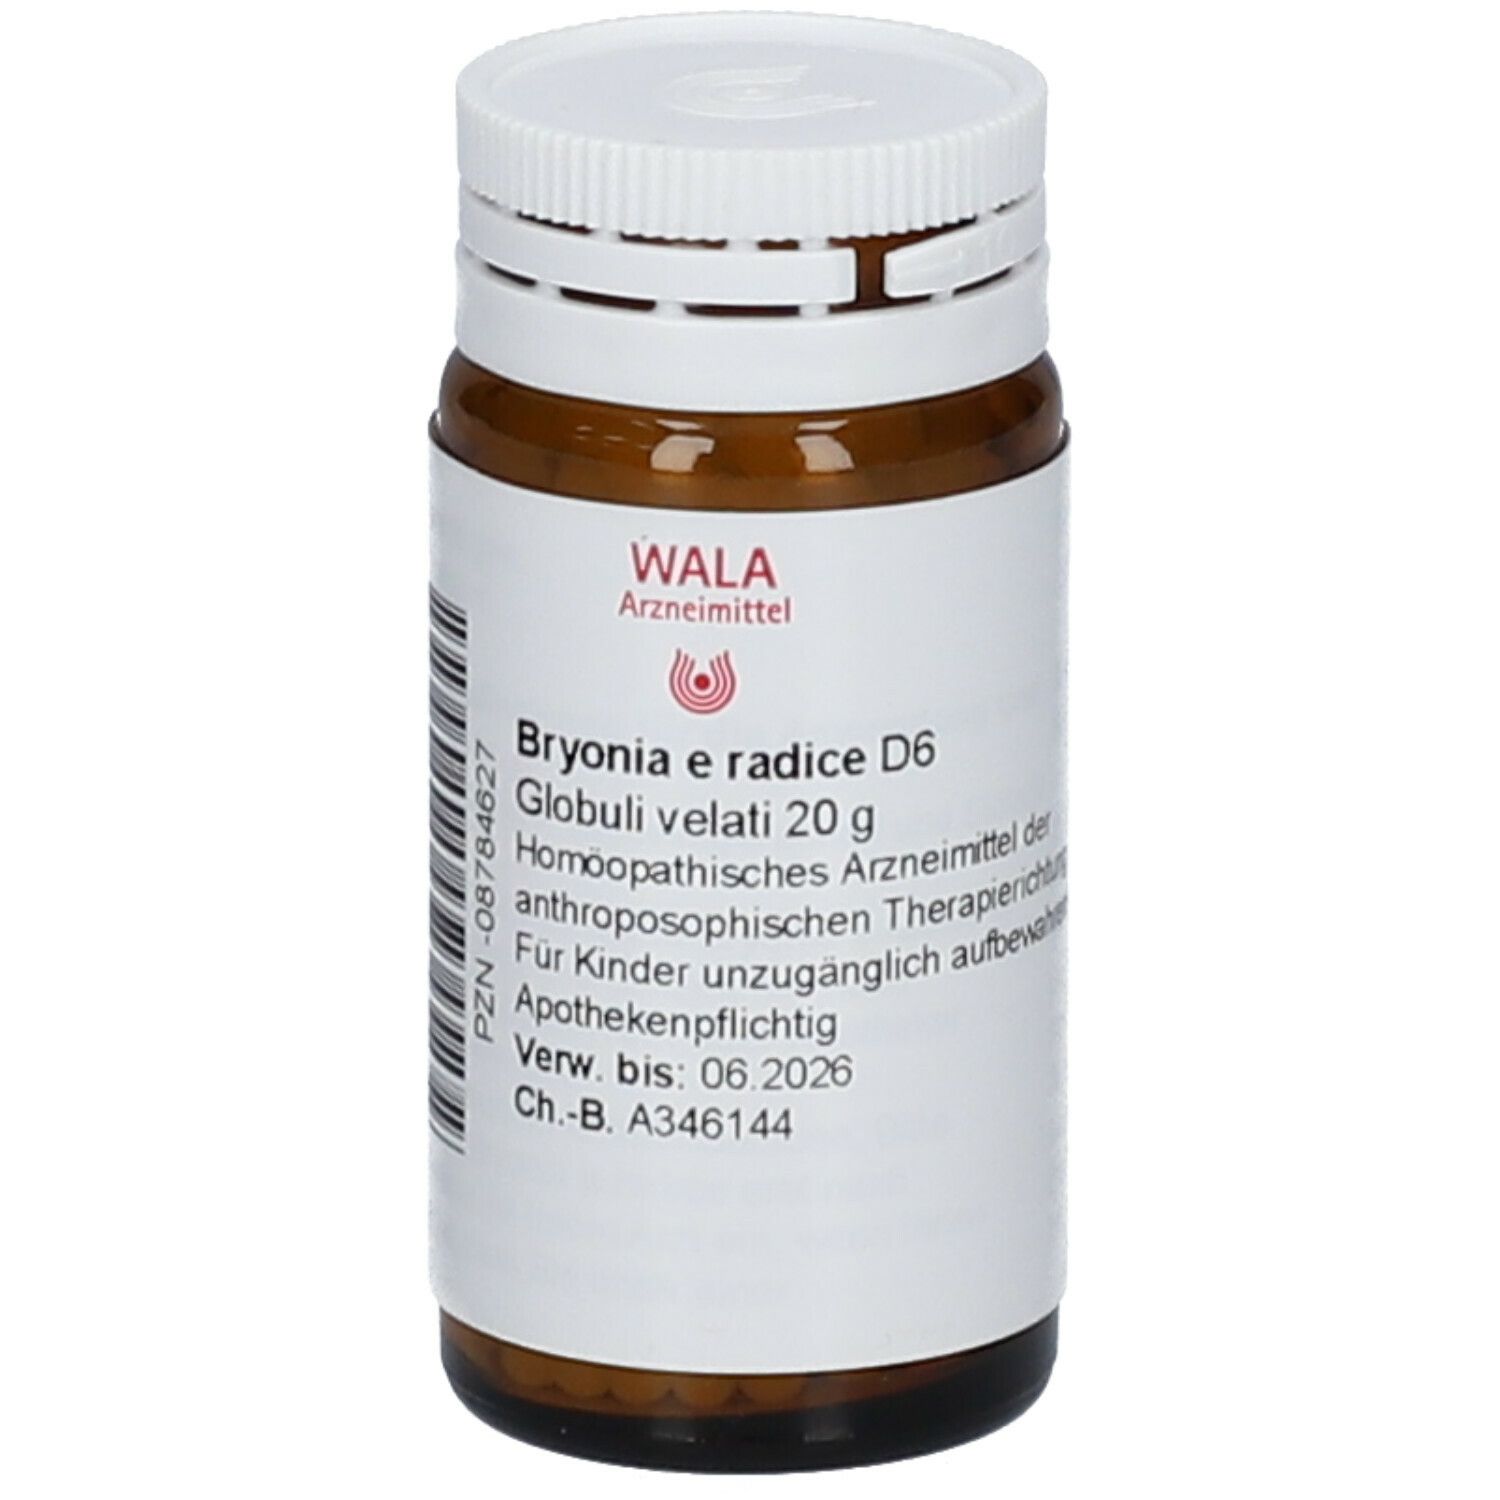 WALA® Bryonia e radice D 6